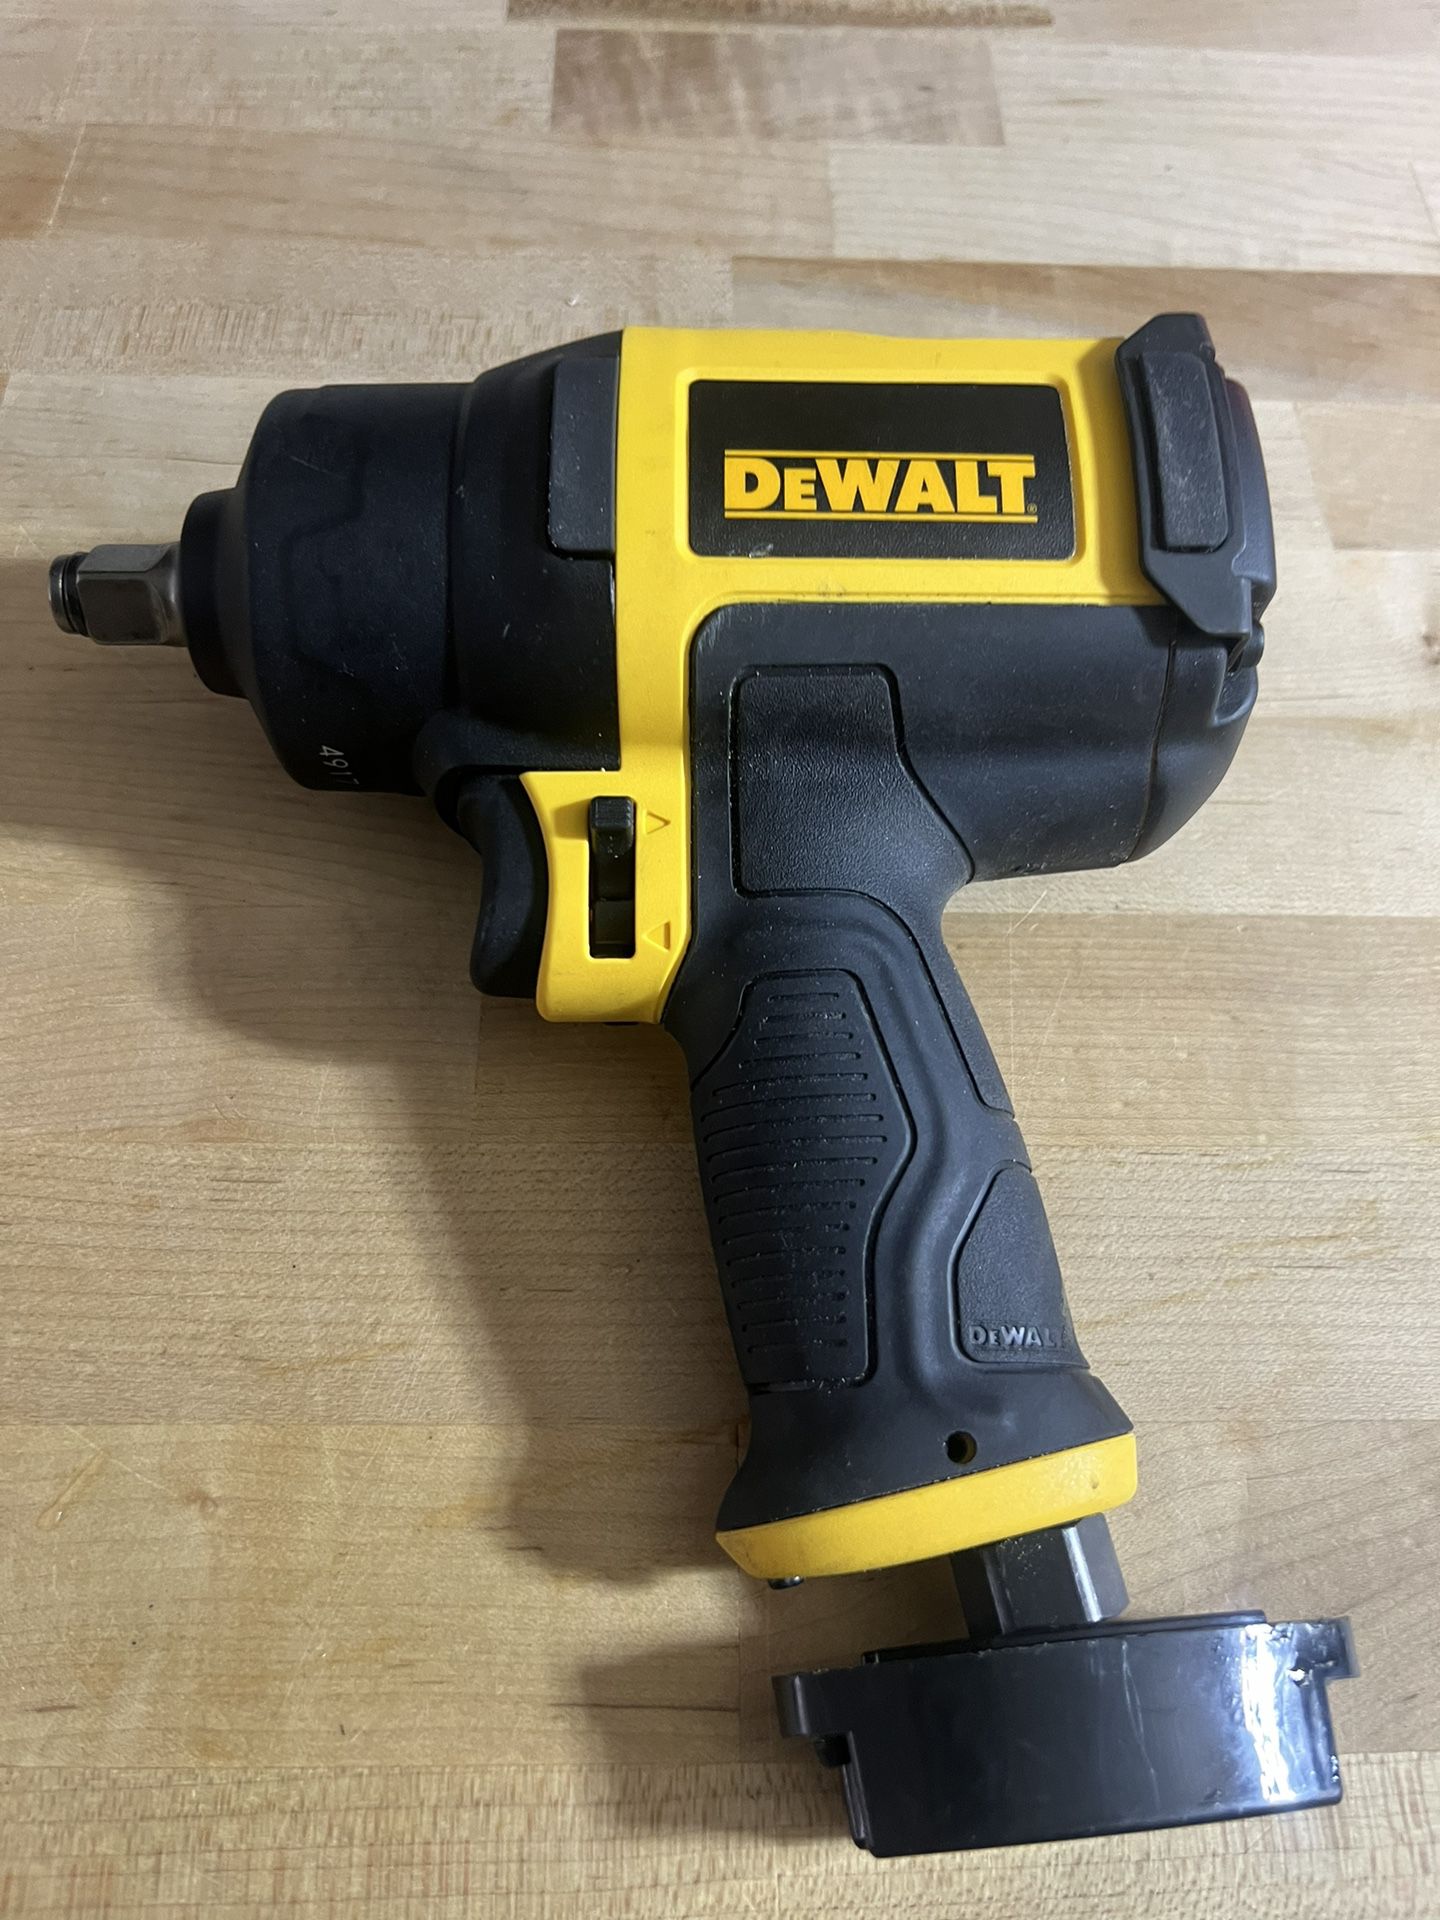 New Dewalt 1/2” Pneumatic Impact Wrench